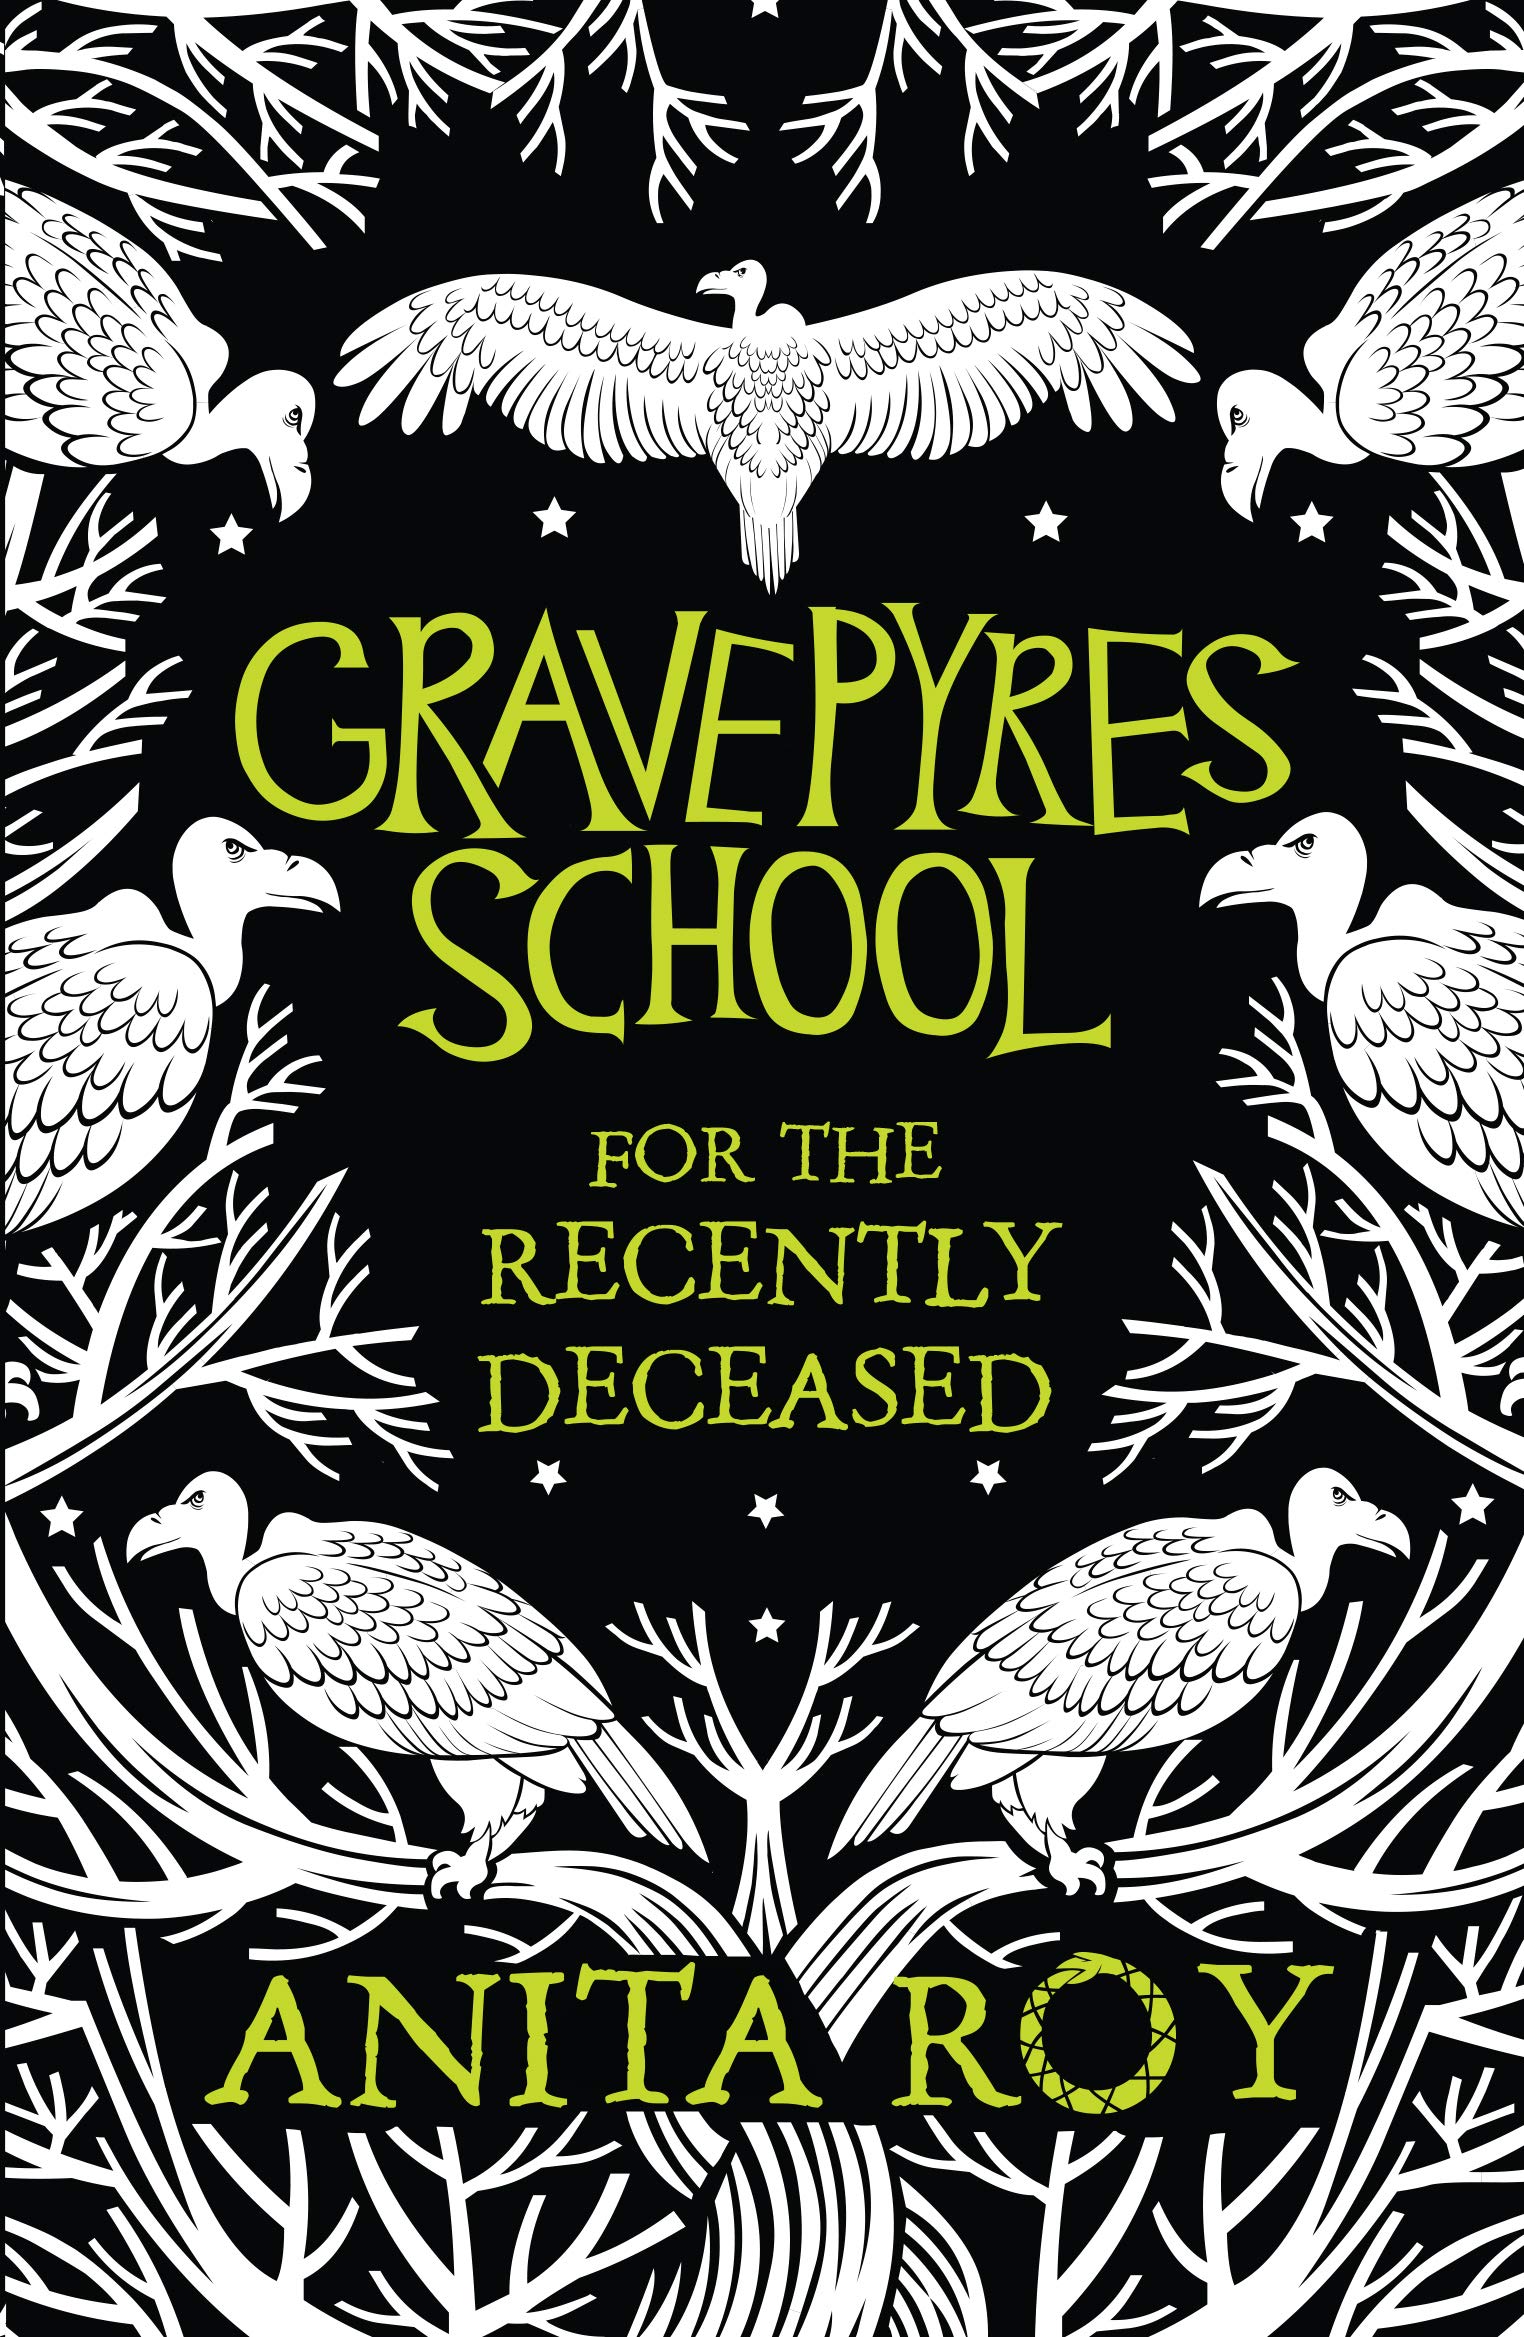 Gravepyres School For The Recently Deceased 